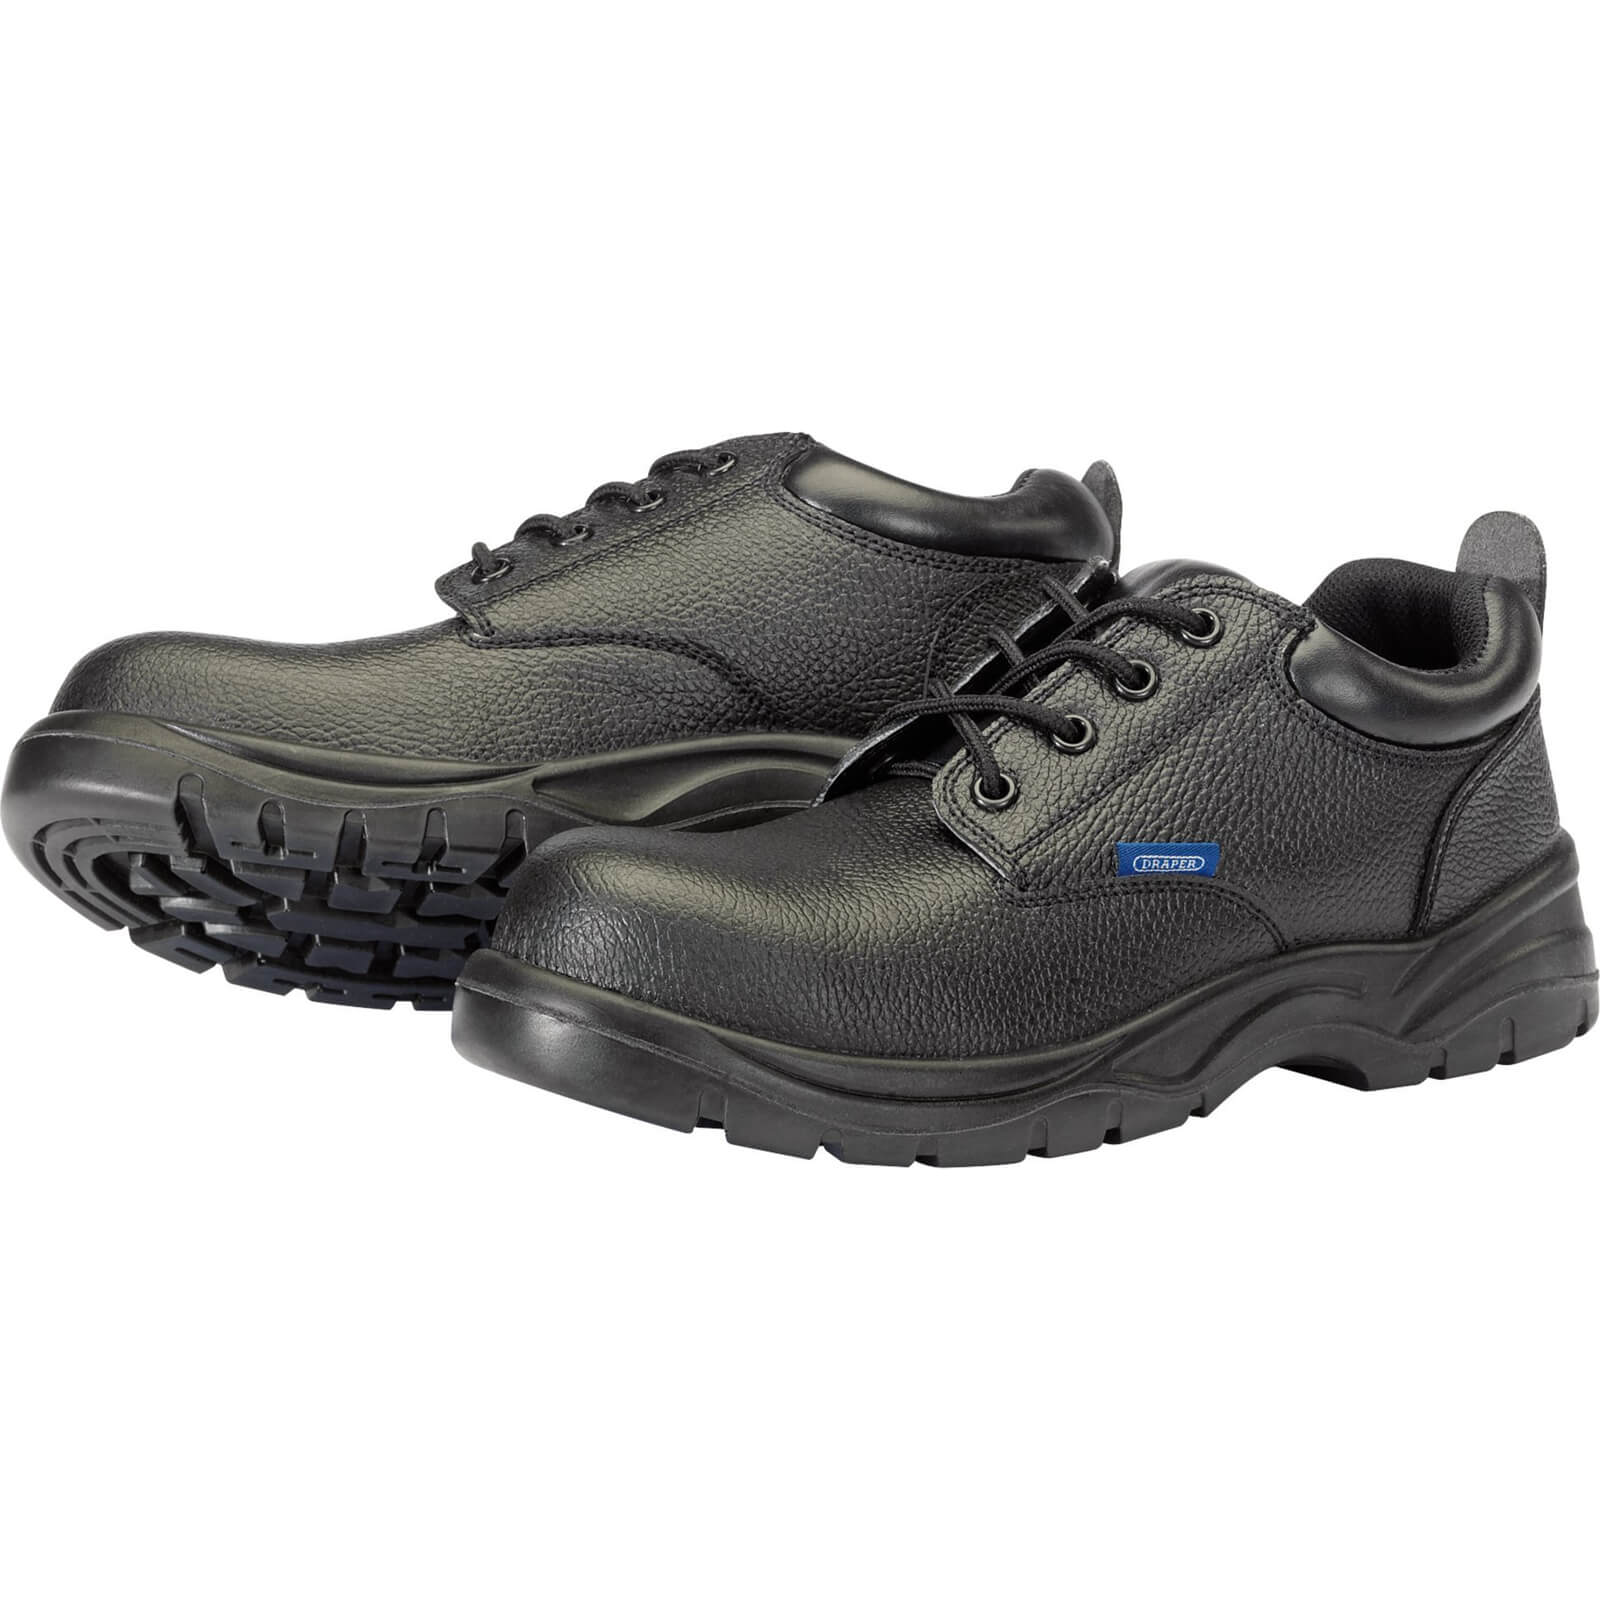 Image of Draper Non Metallic Composite Safety Shoe Size 6